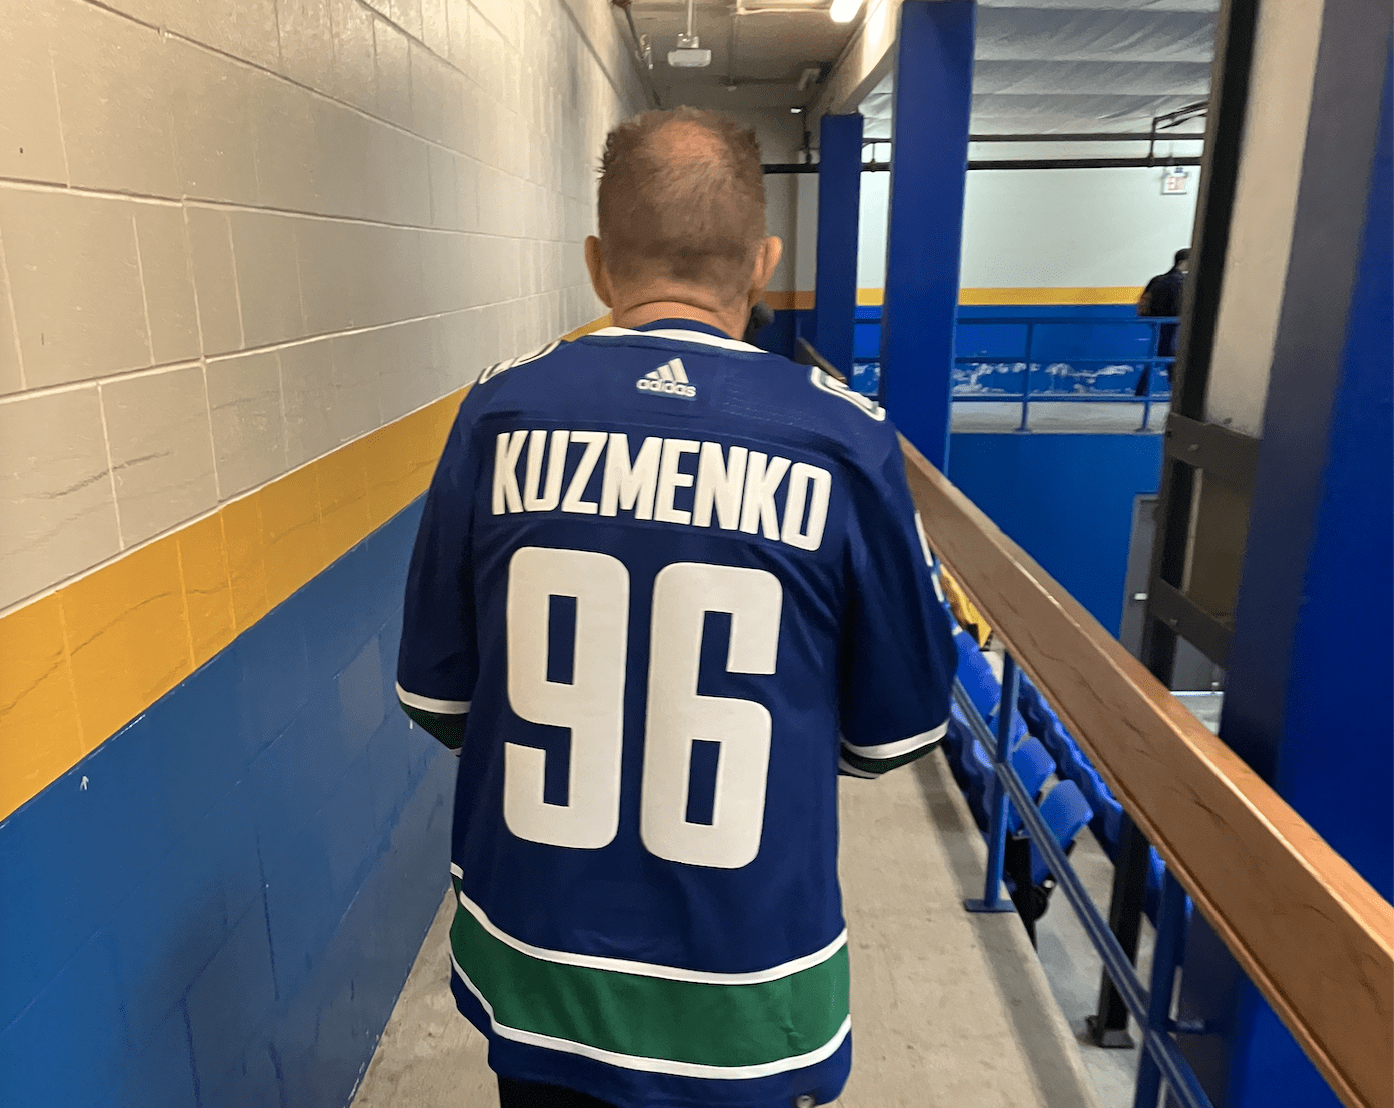 Vancouver Canucks, Kuzmenko jersey